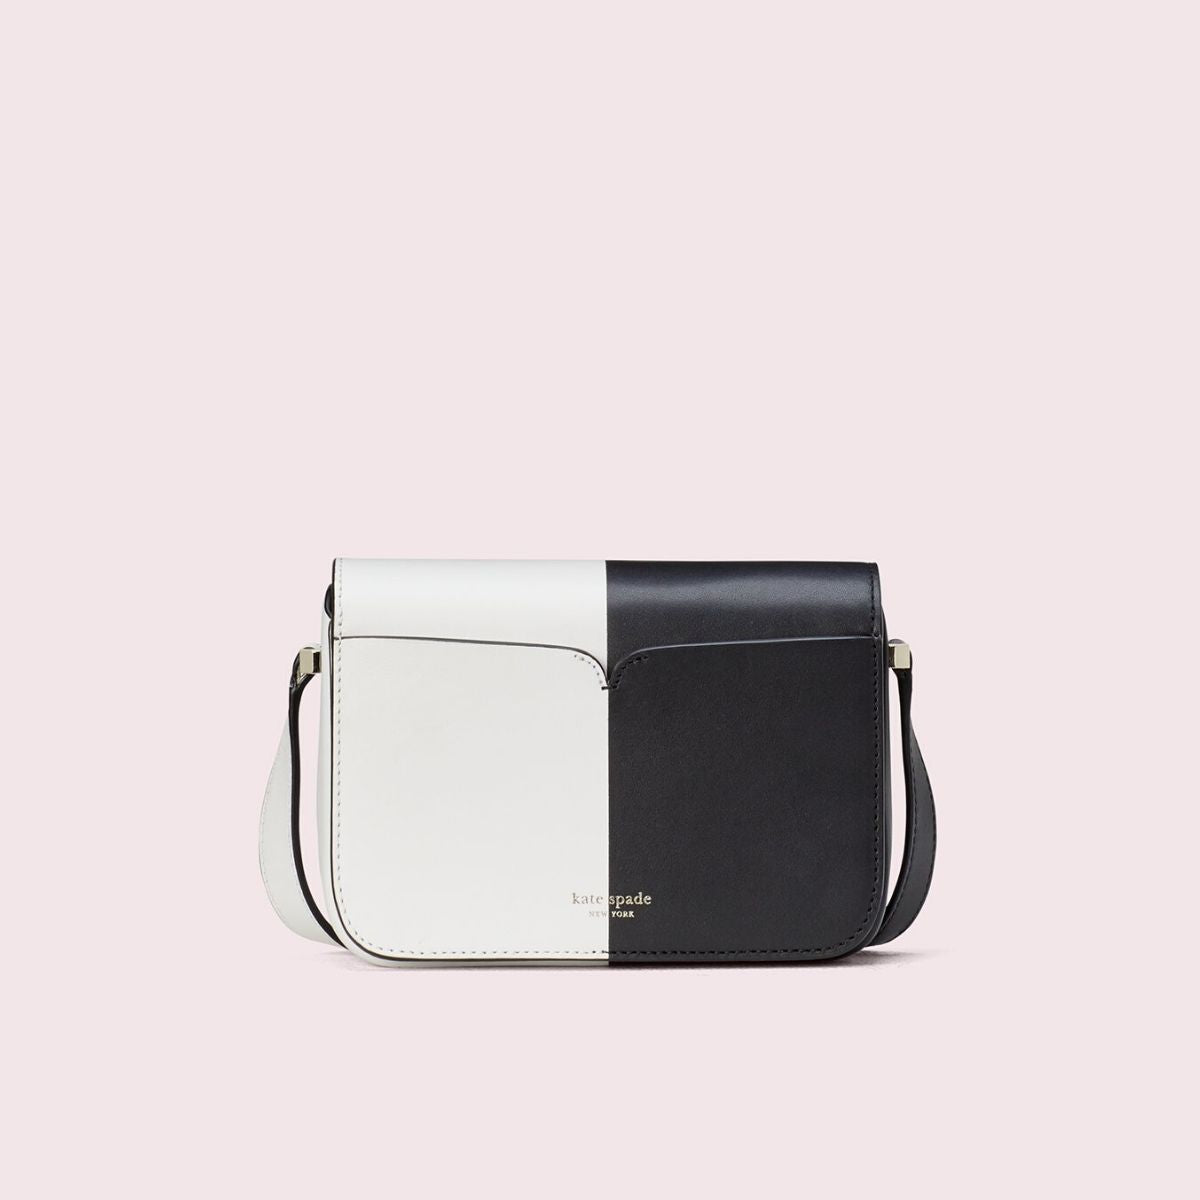 Kate Spade NY Small Black Leather Handbag / Shoulder bag